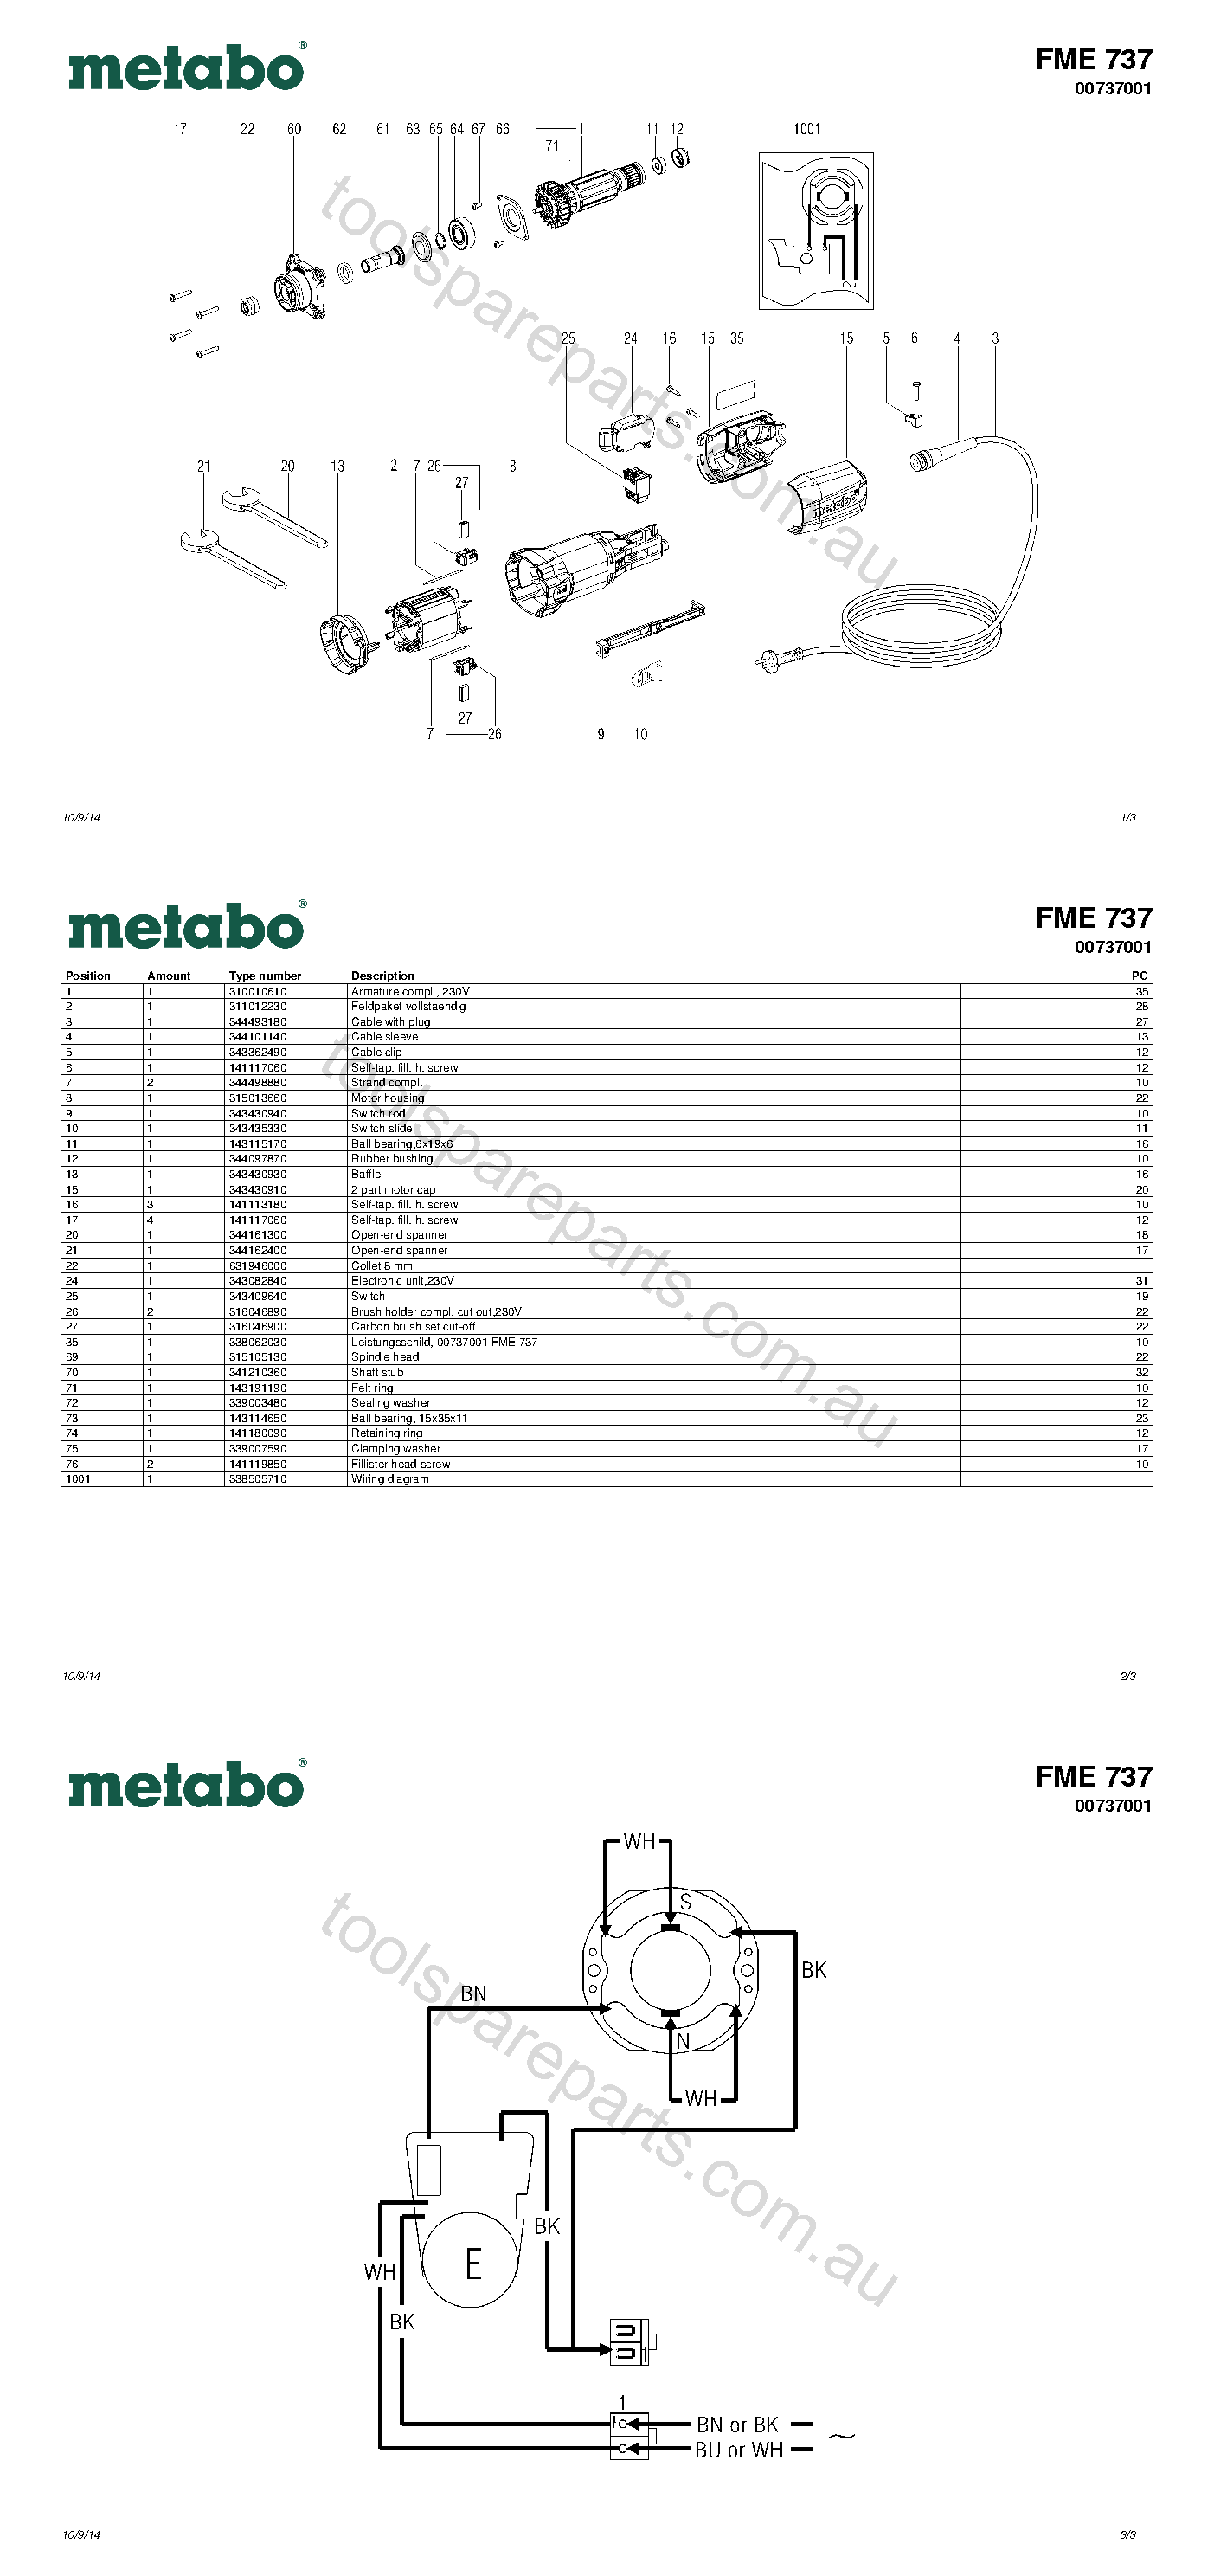 Metabo FME 737 00737001  Diagram 1